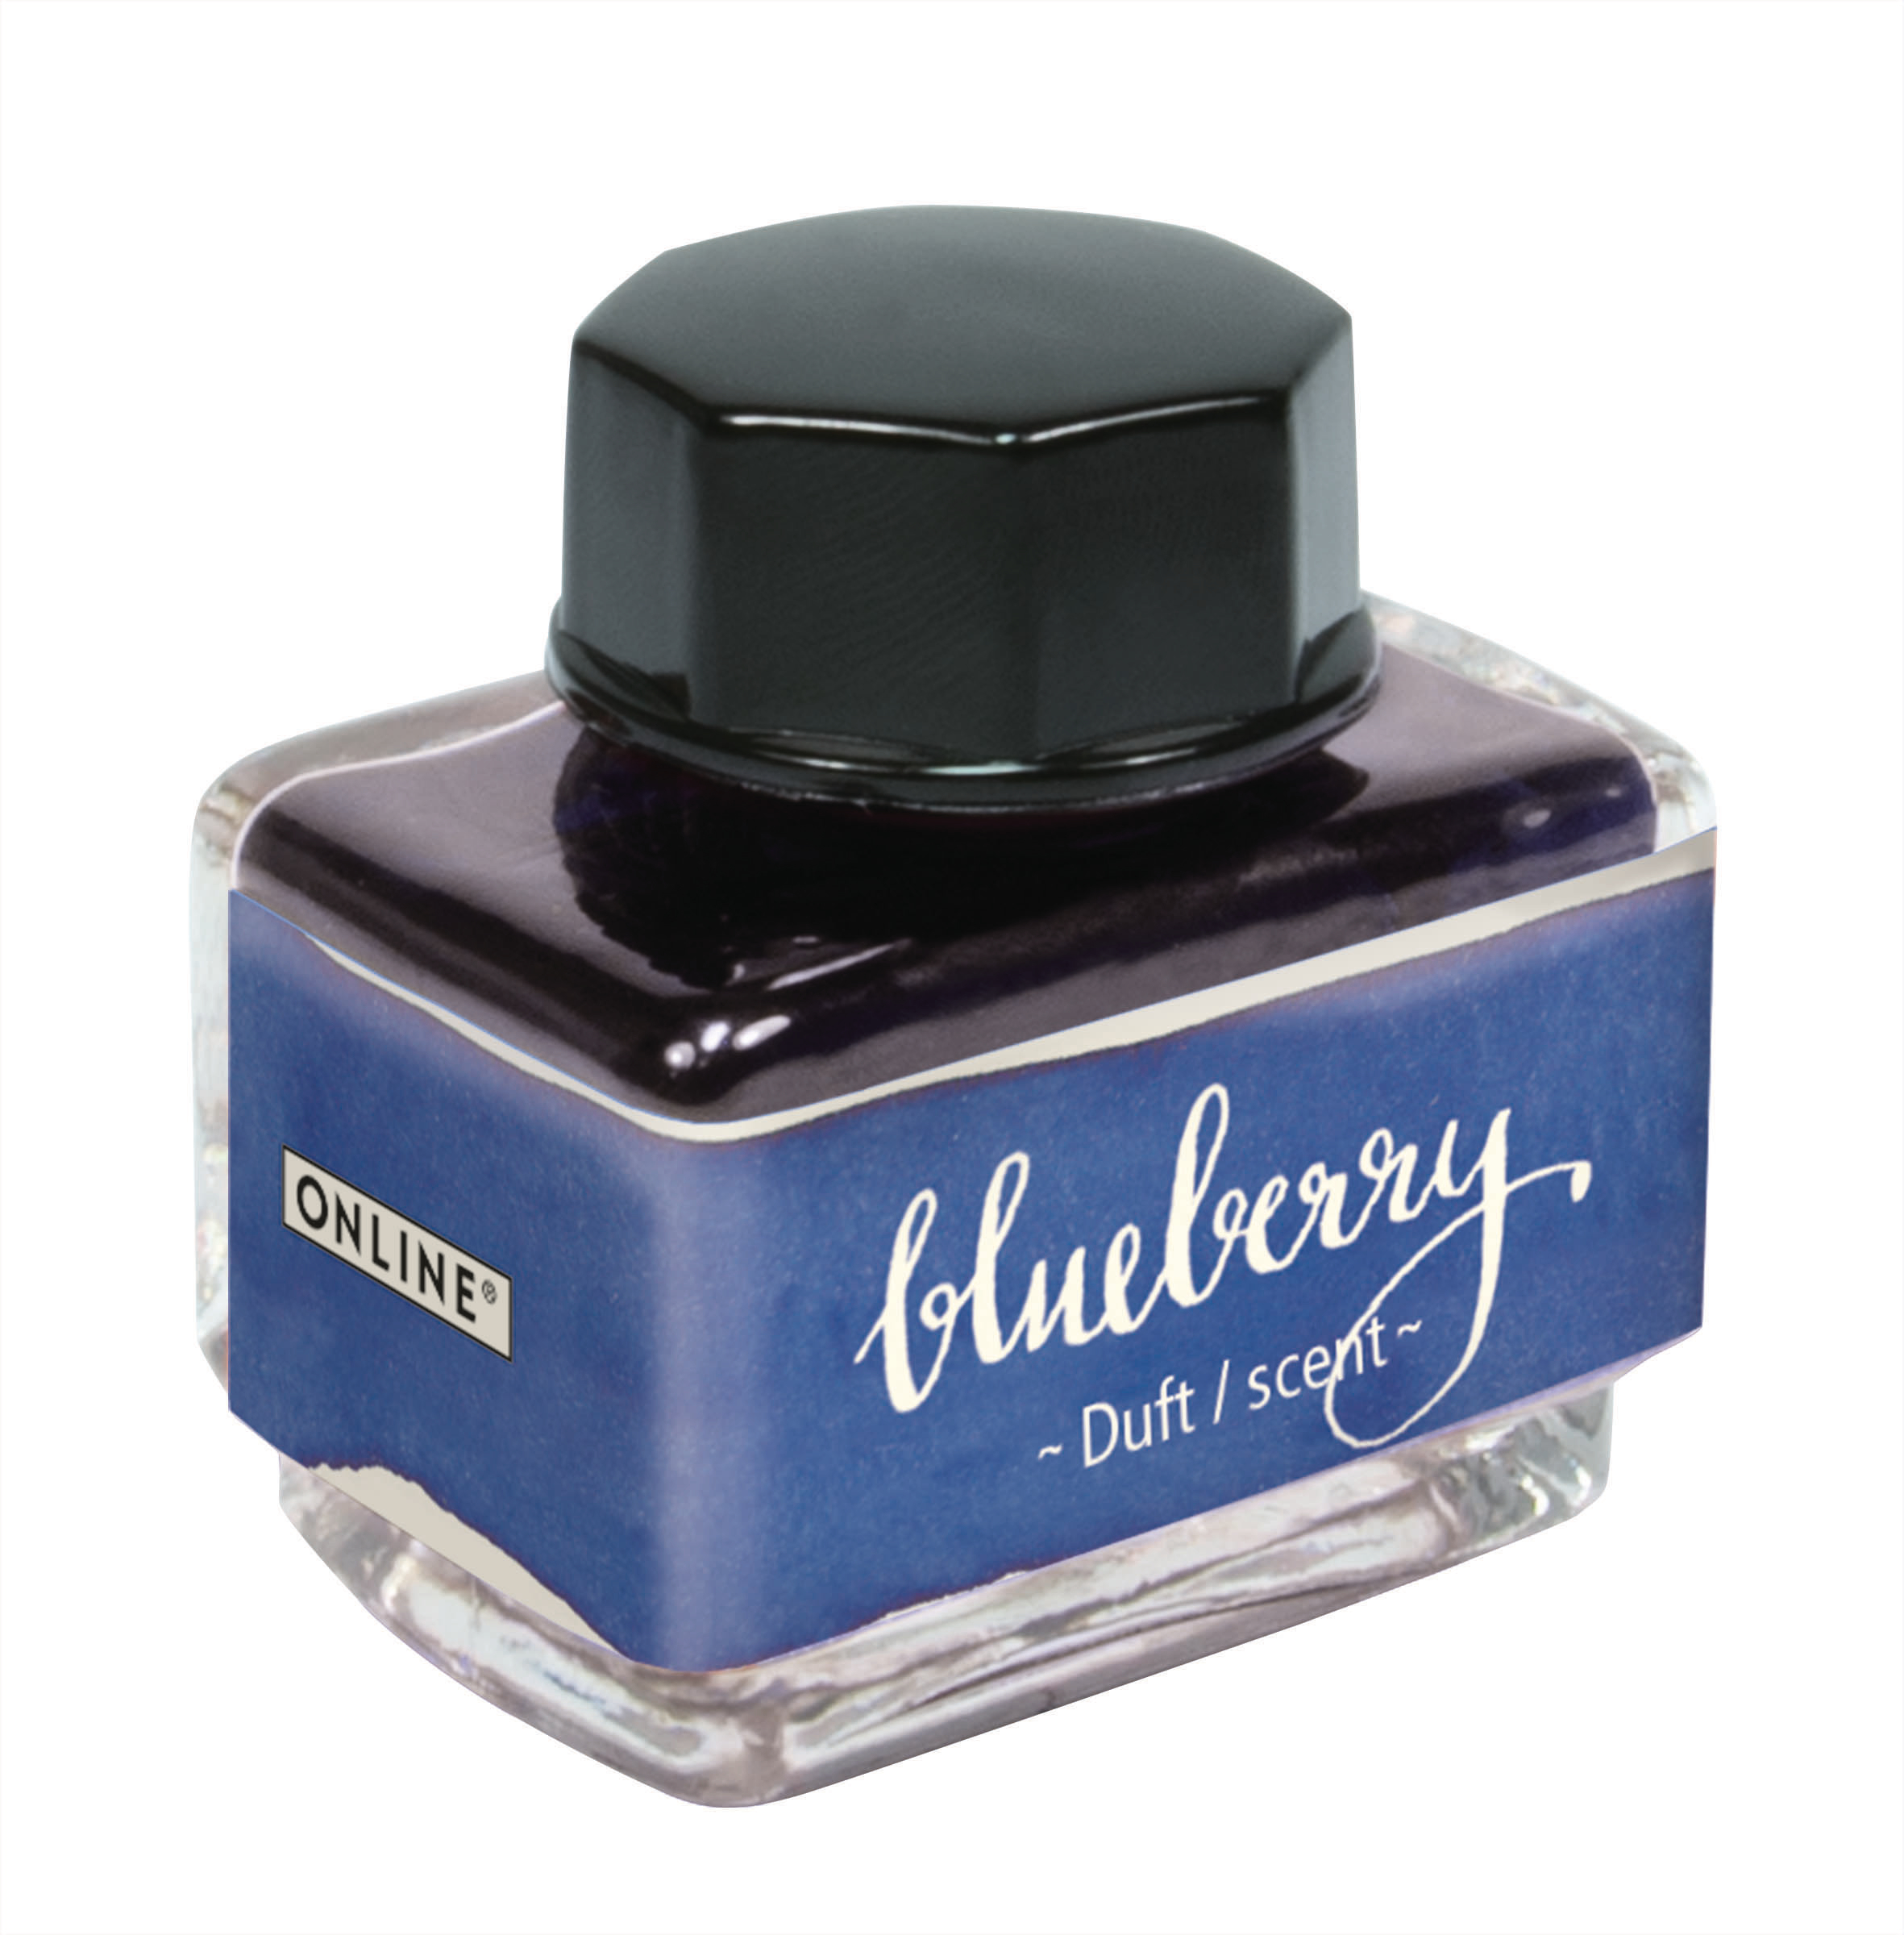 ONLINE Encre 15ml 17060/3 fleurer Blueberry, Royal b.